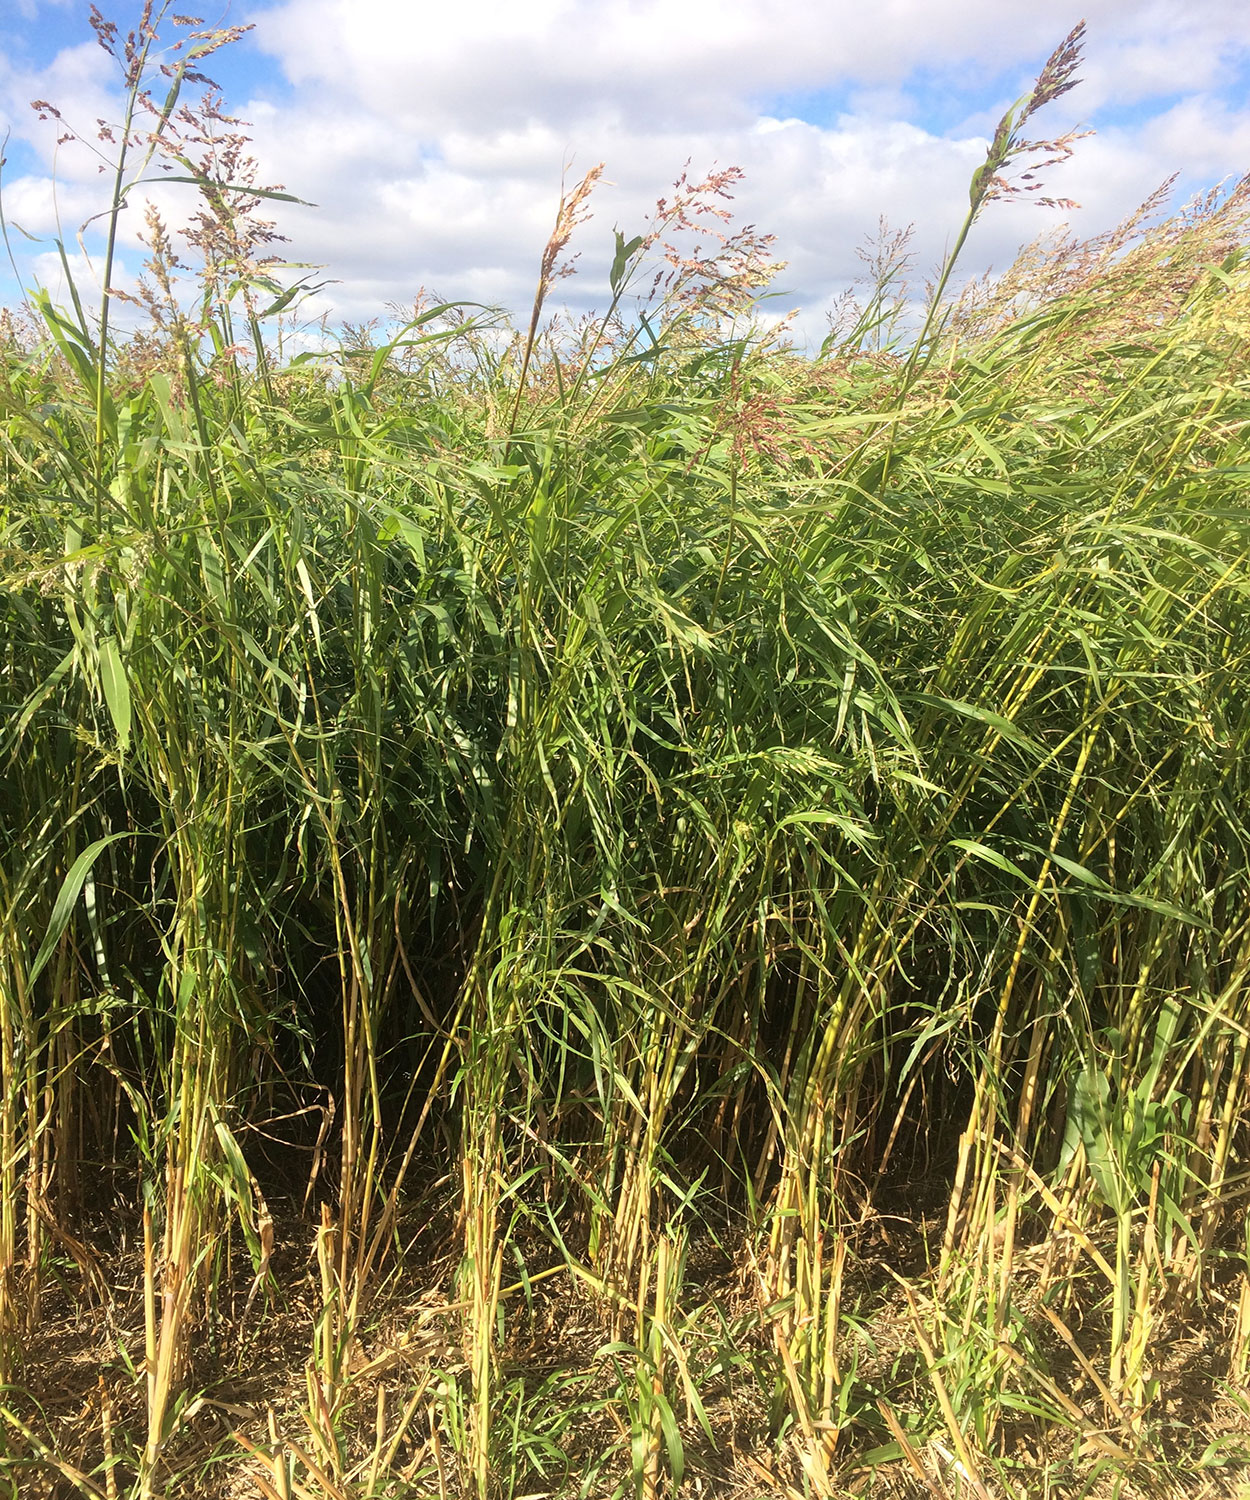 A tall, grassy warm-season cover crop blend grown in South Dakota.